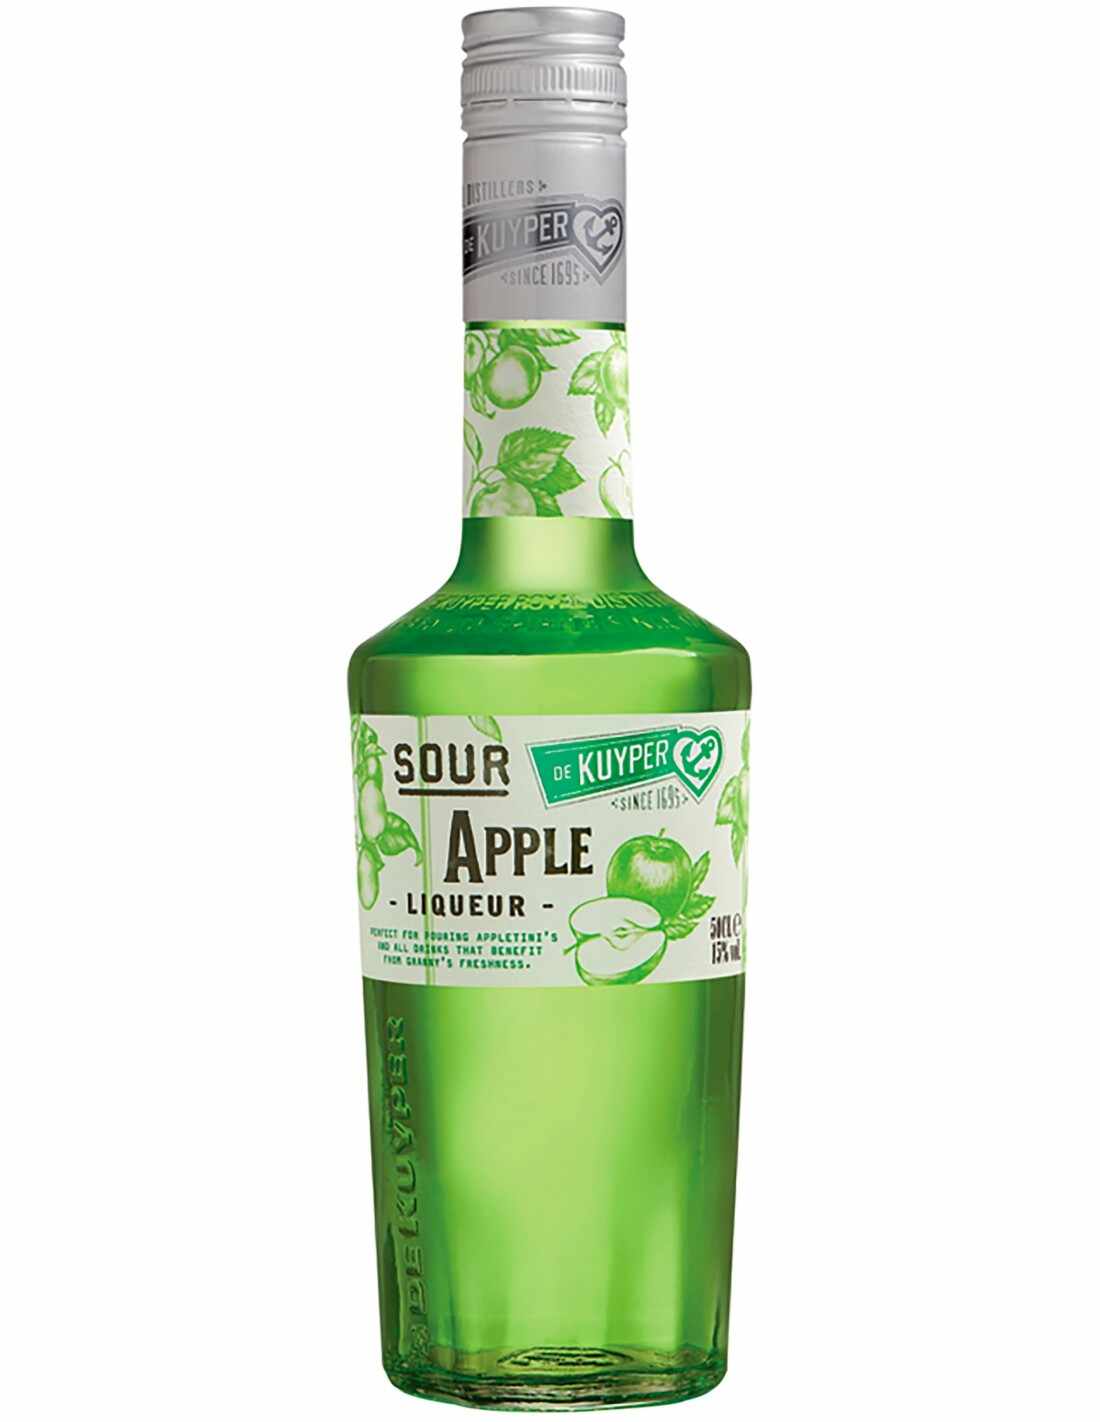 Lichior De Kuyper Sour Apple, 15% alc., 0.7L, Olanda